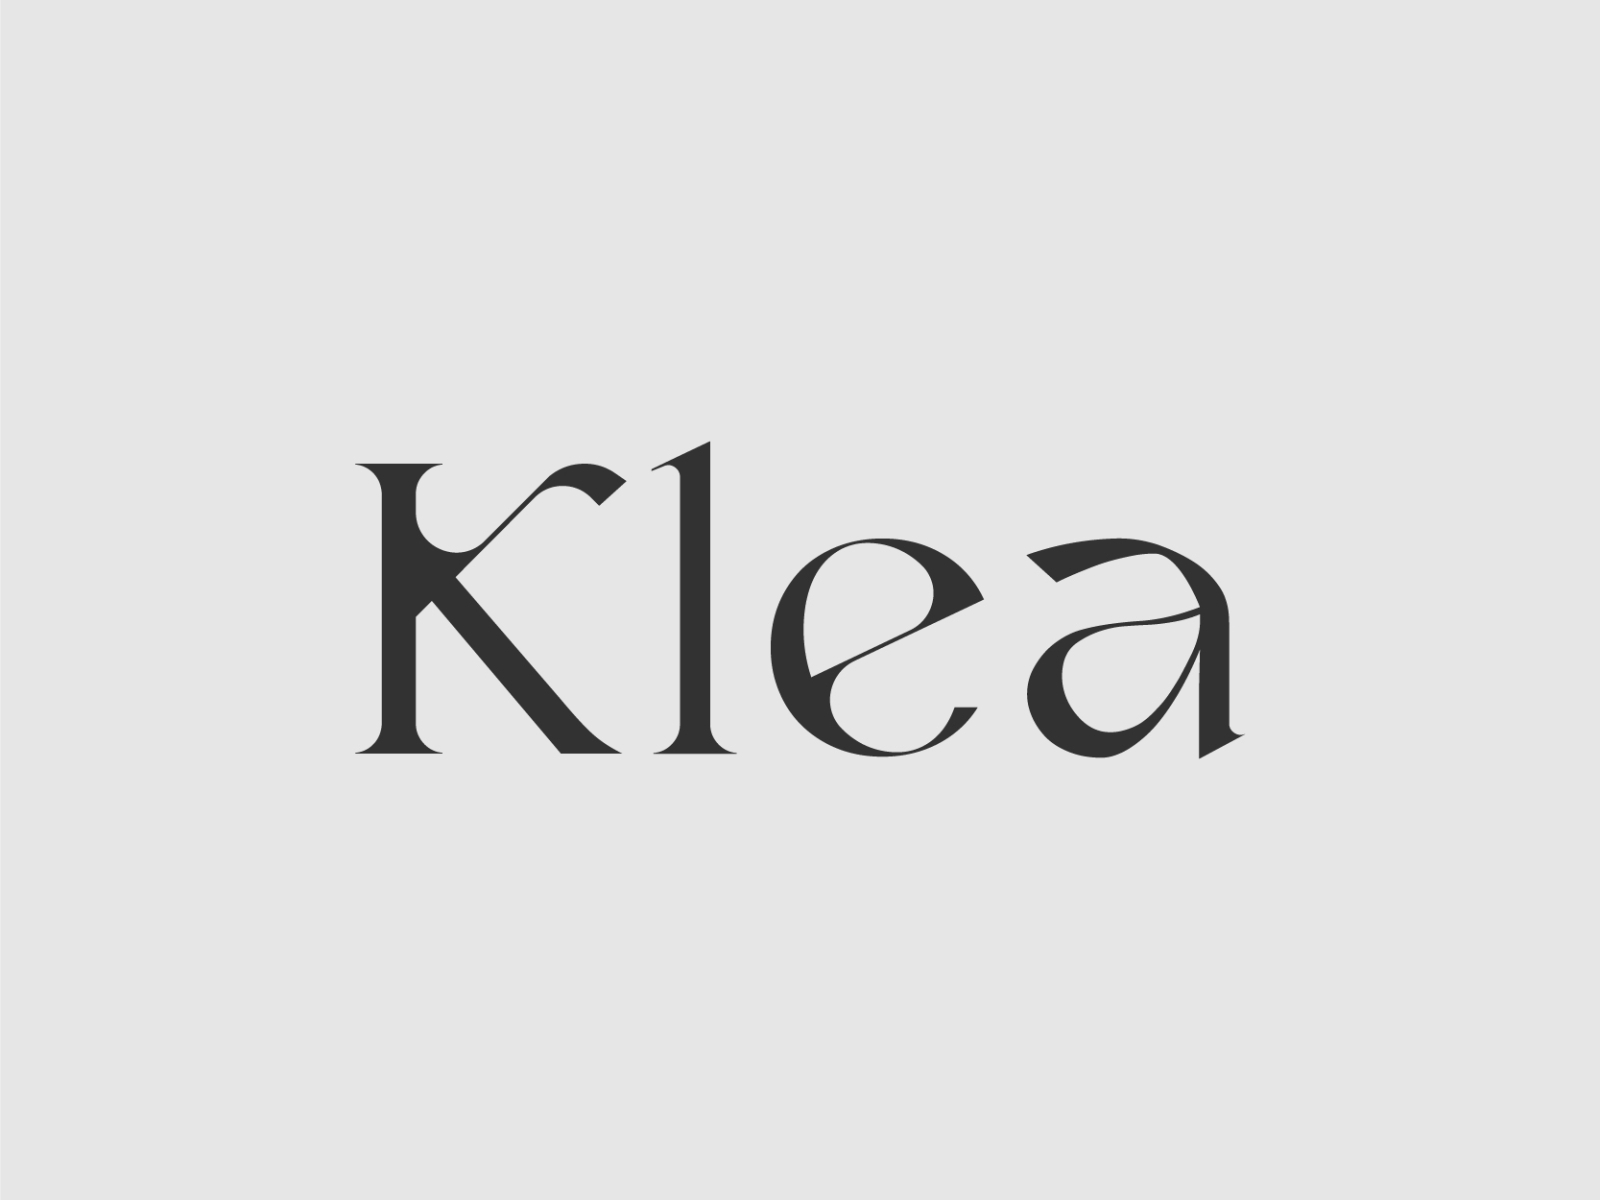 Klea Wordmark by Bojan Gulevski on Dribbble